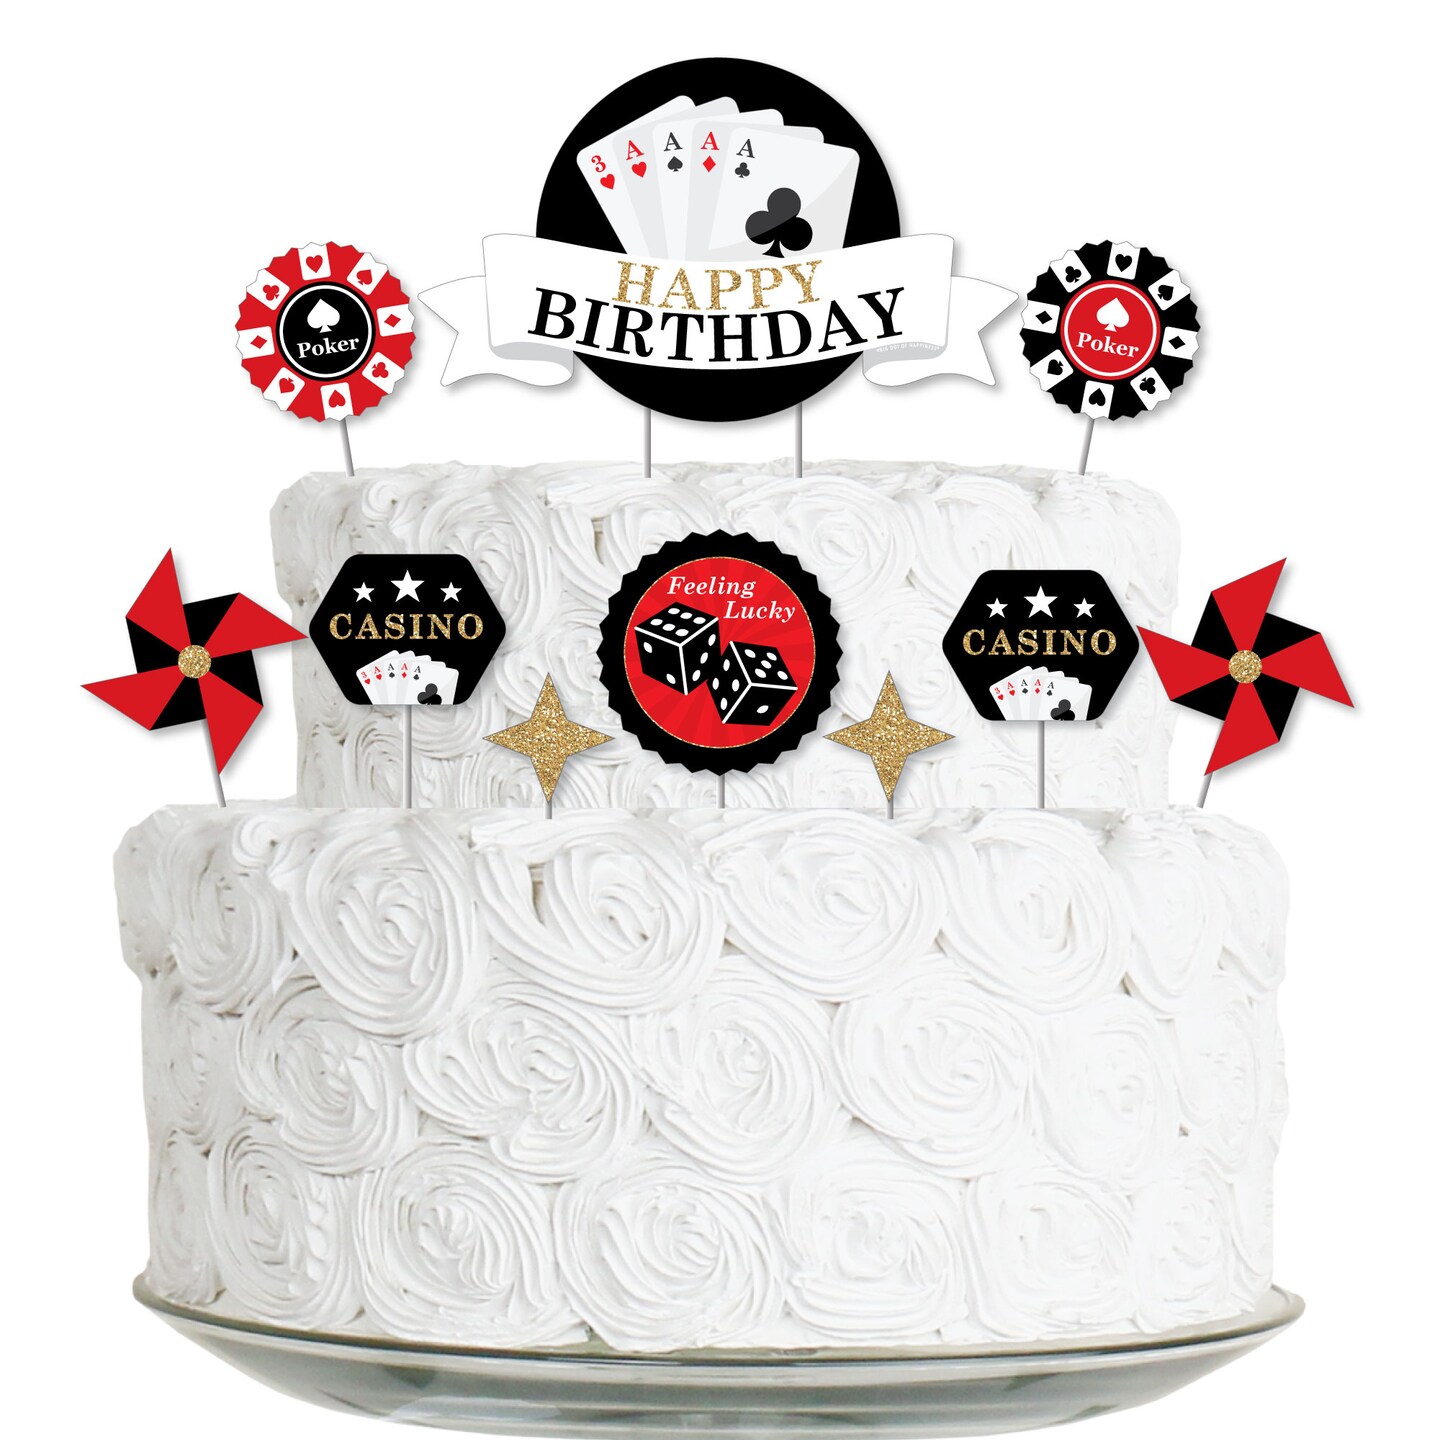 Big Dot of Happiness Las Vegas - Casino Birthday Party Cake Decorating Kit  - Happy Birthday Cake Topper Set - 11 Pieces